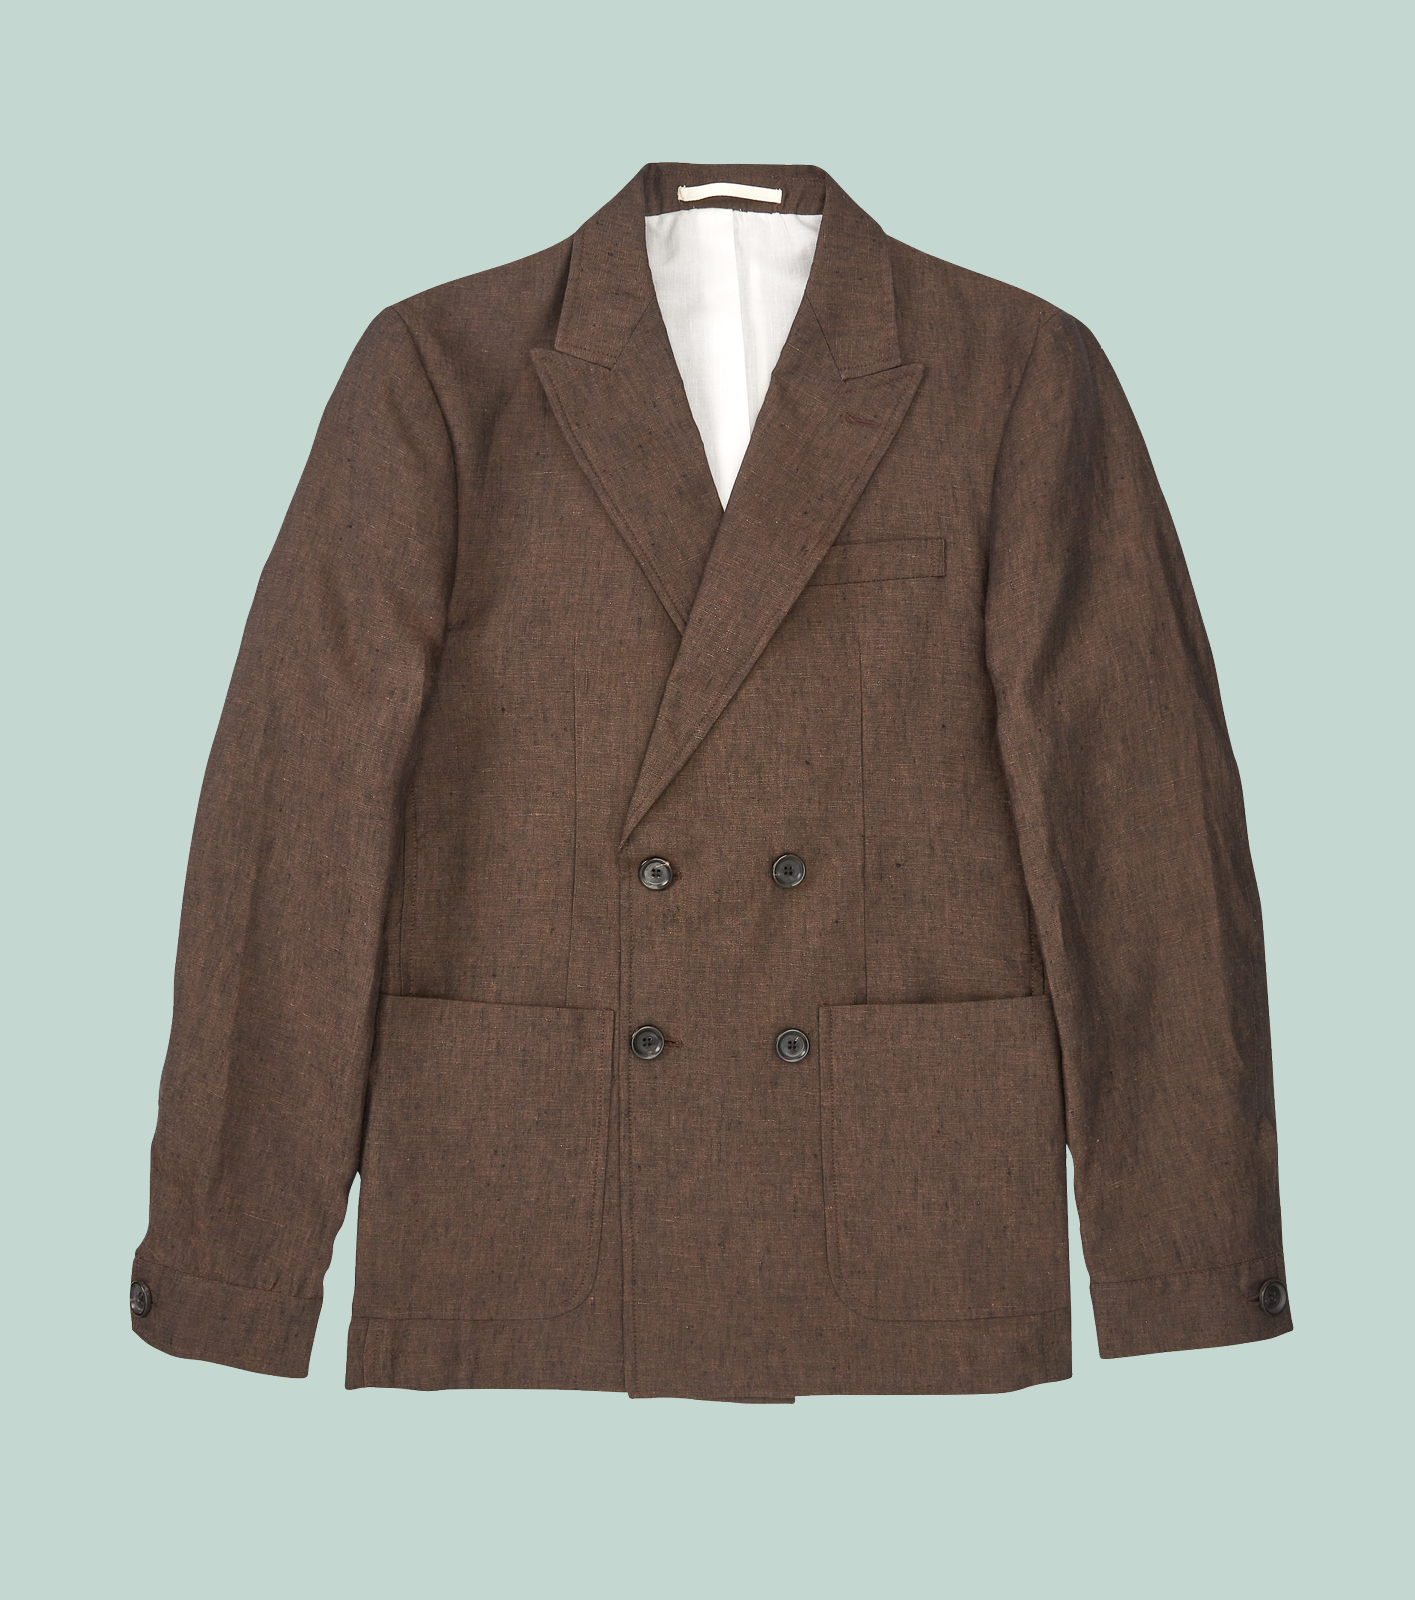 Oliver Spencer double- breasted jacket, £410